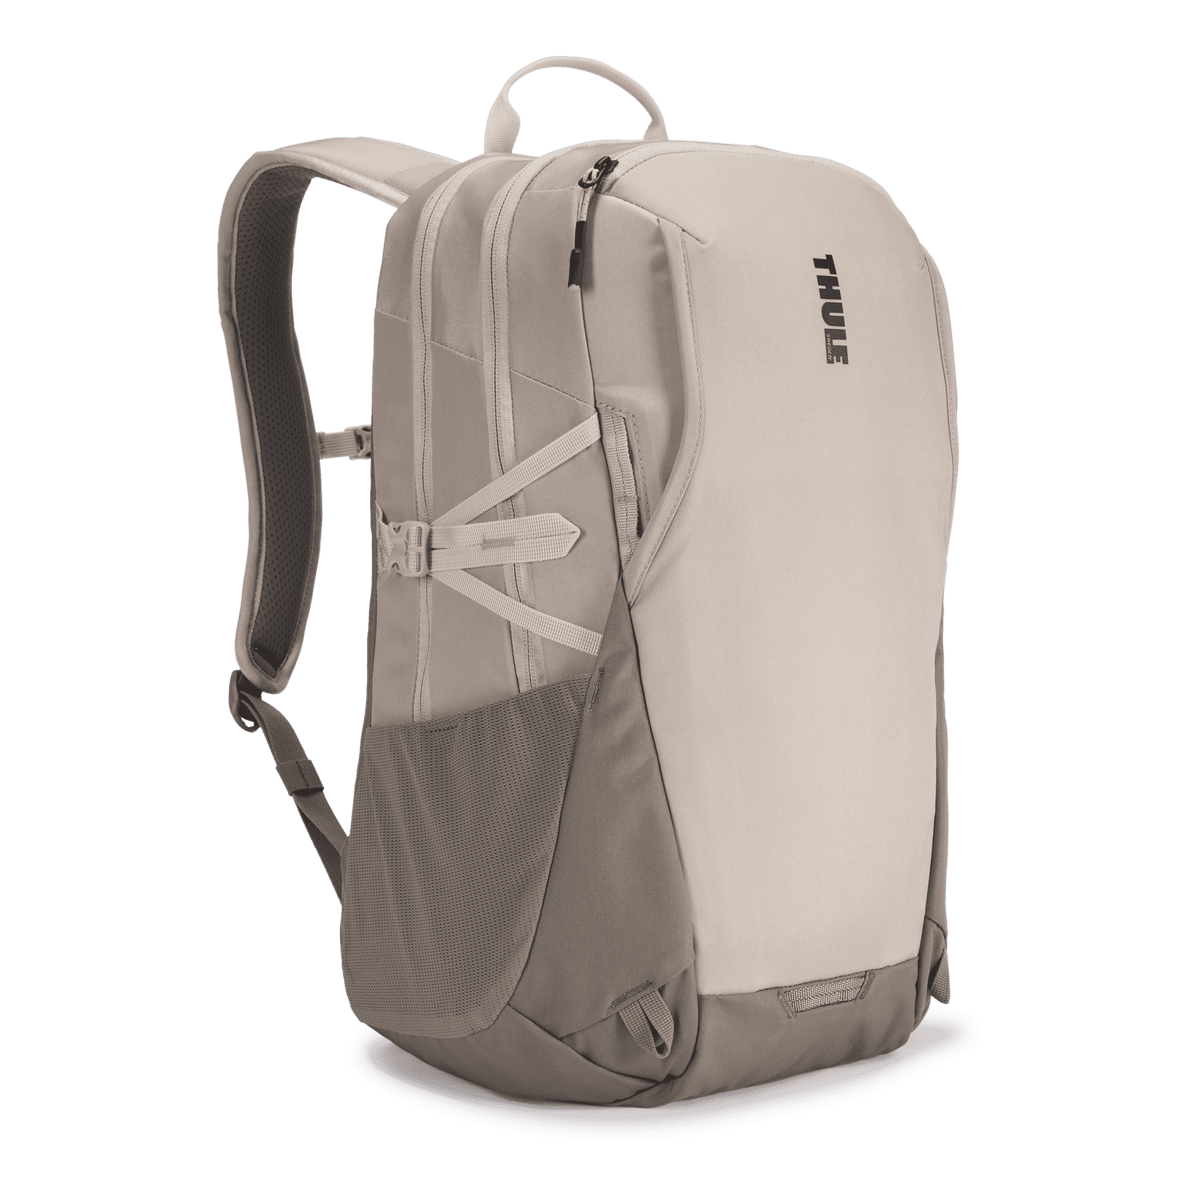 Thule EnRoute backpack 23L pelican gray/vetiver gray